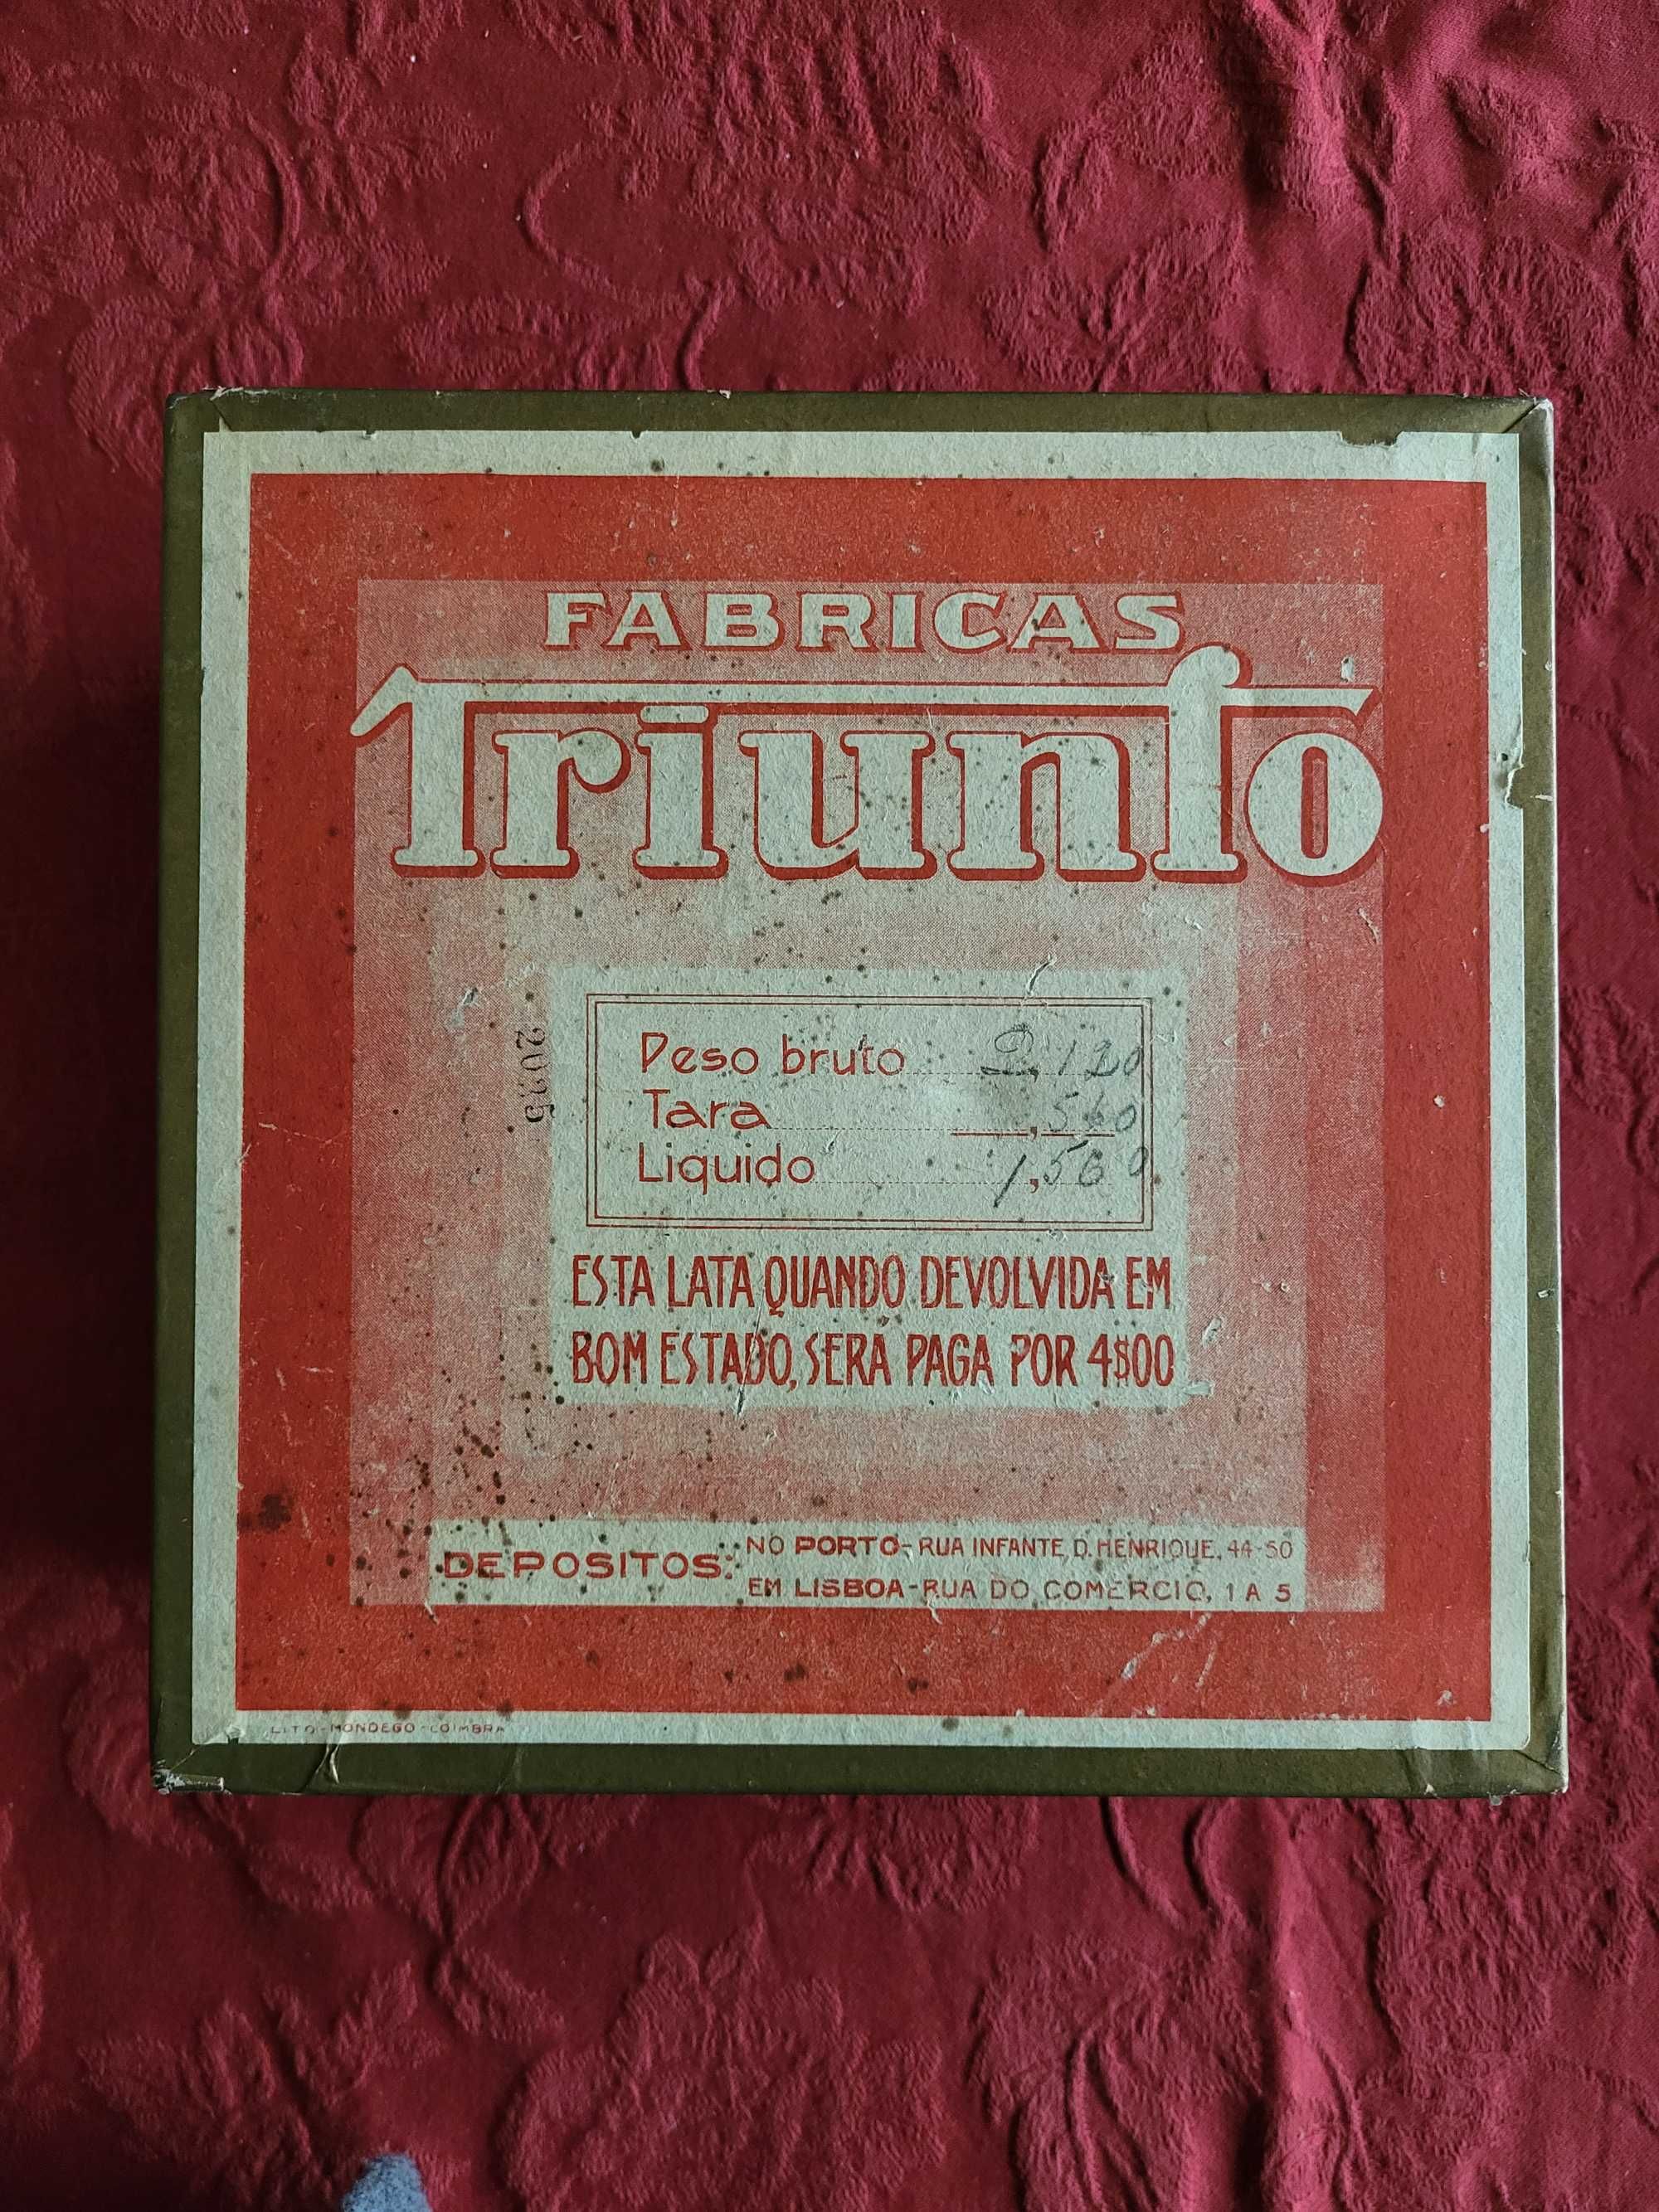 Caixa de bolachas 'Triunfo'